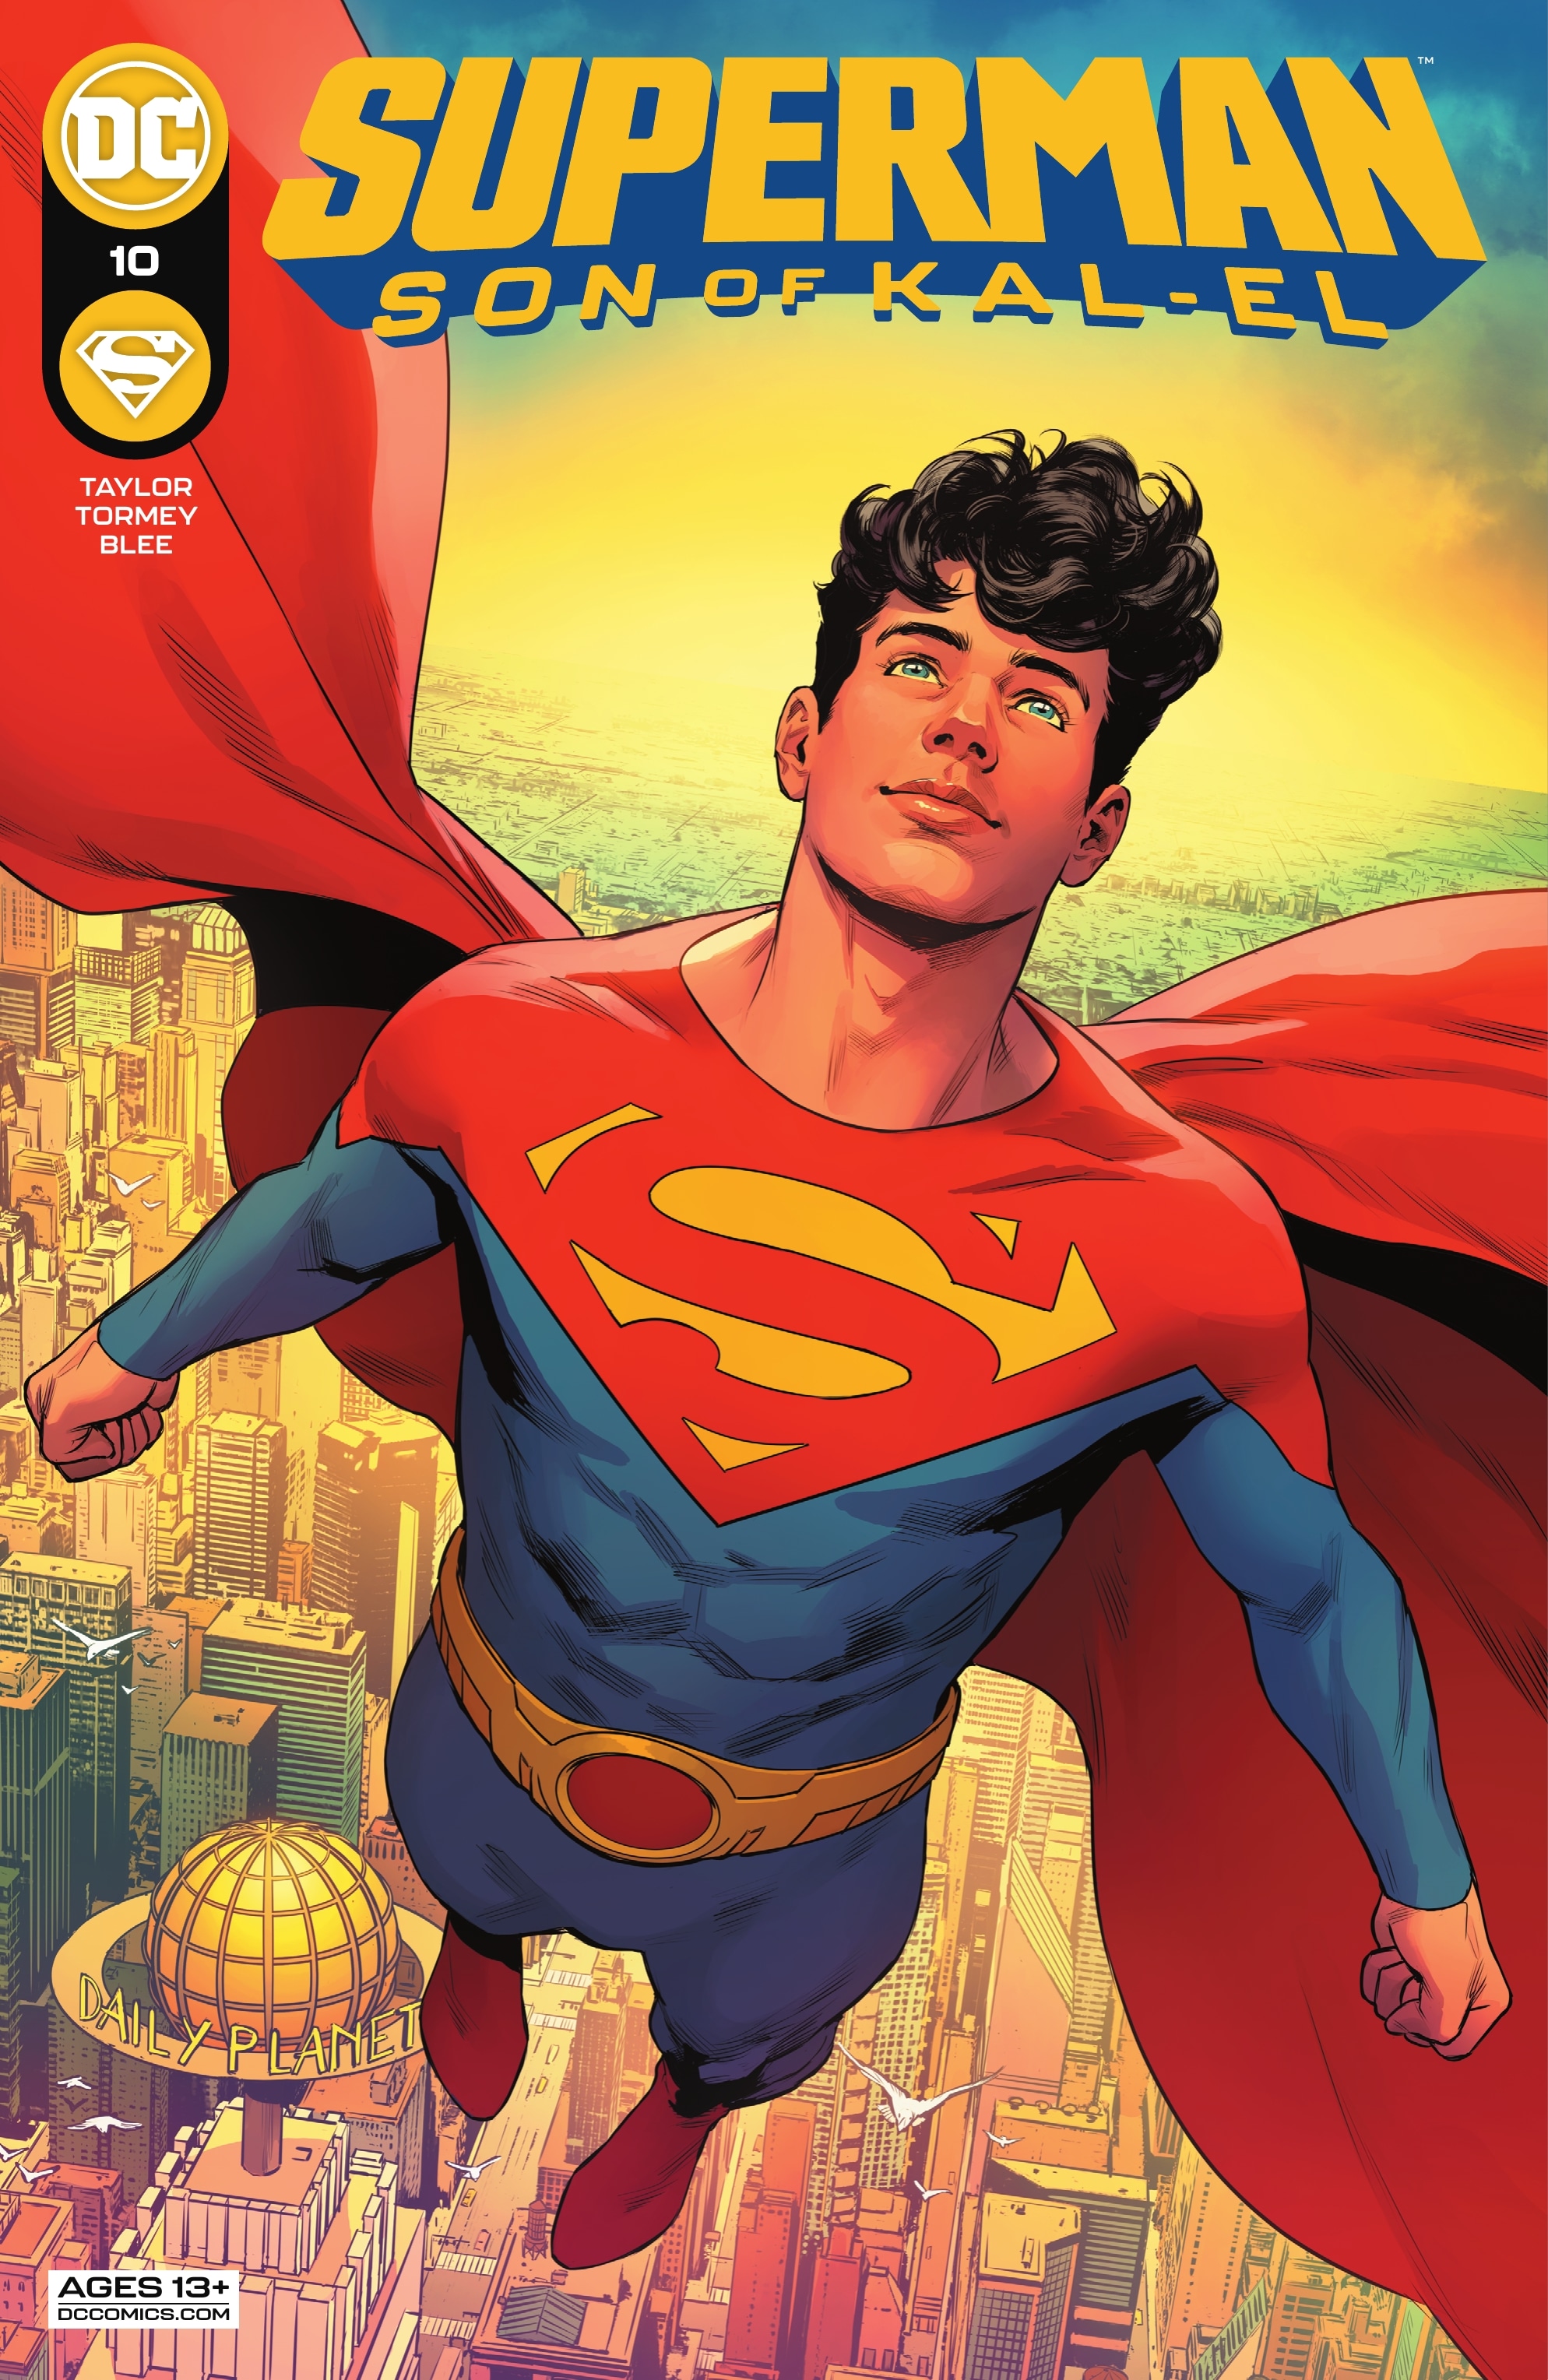 Superman son of kal el read online